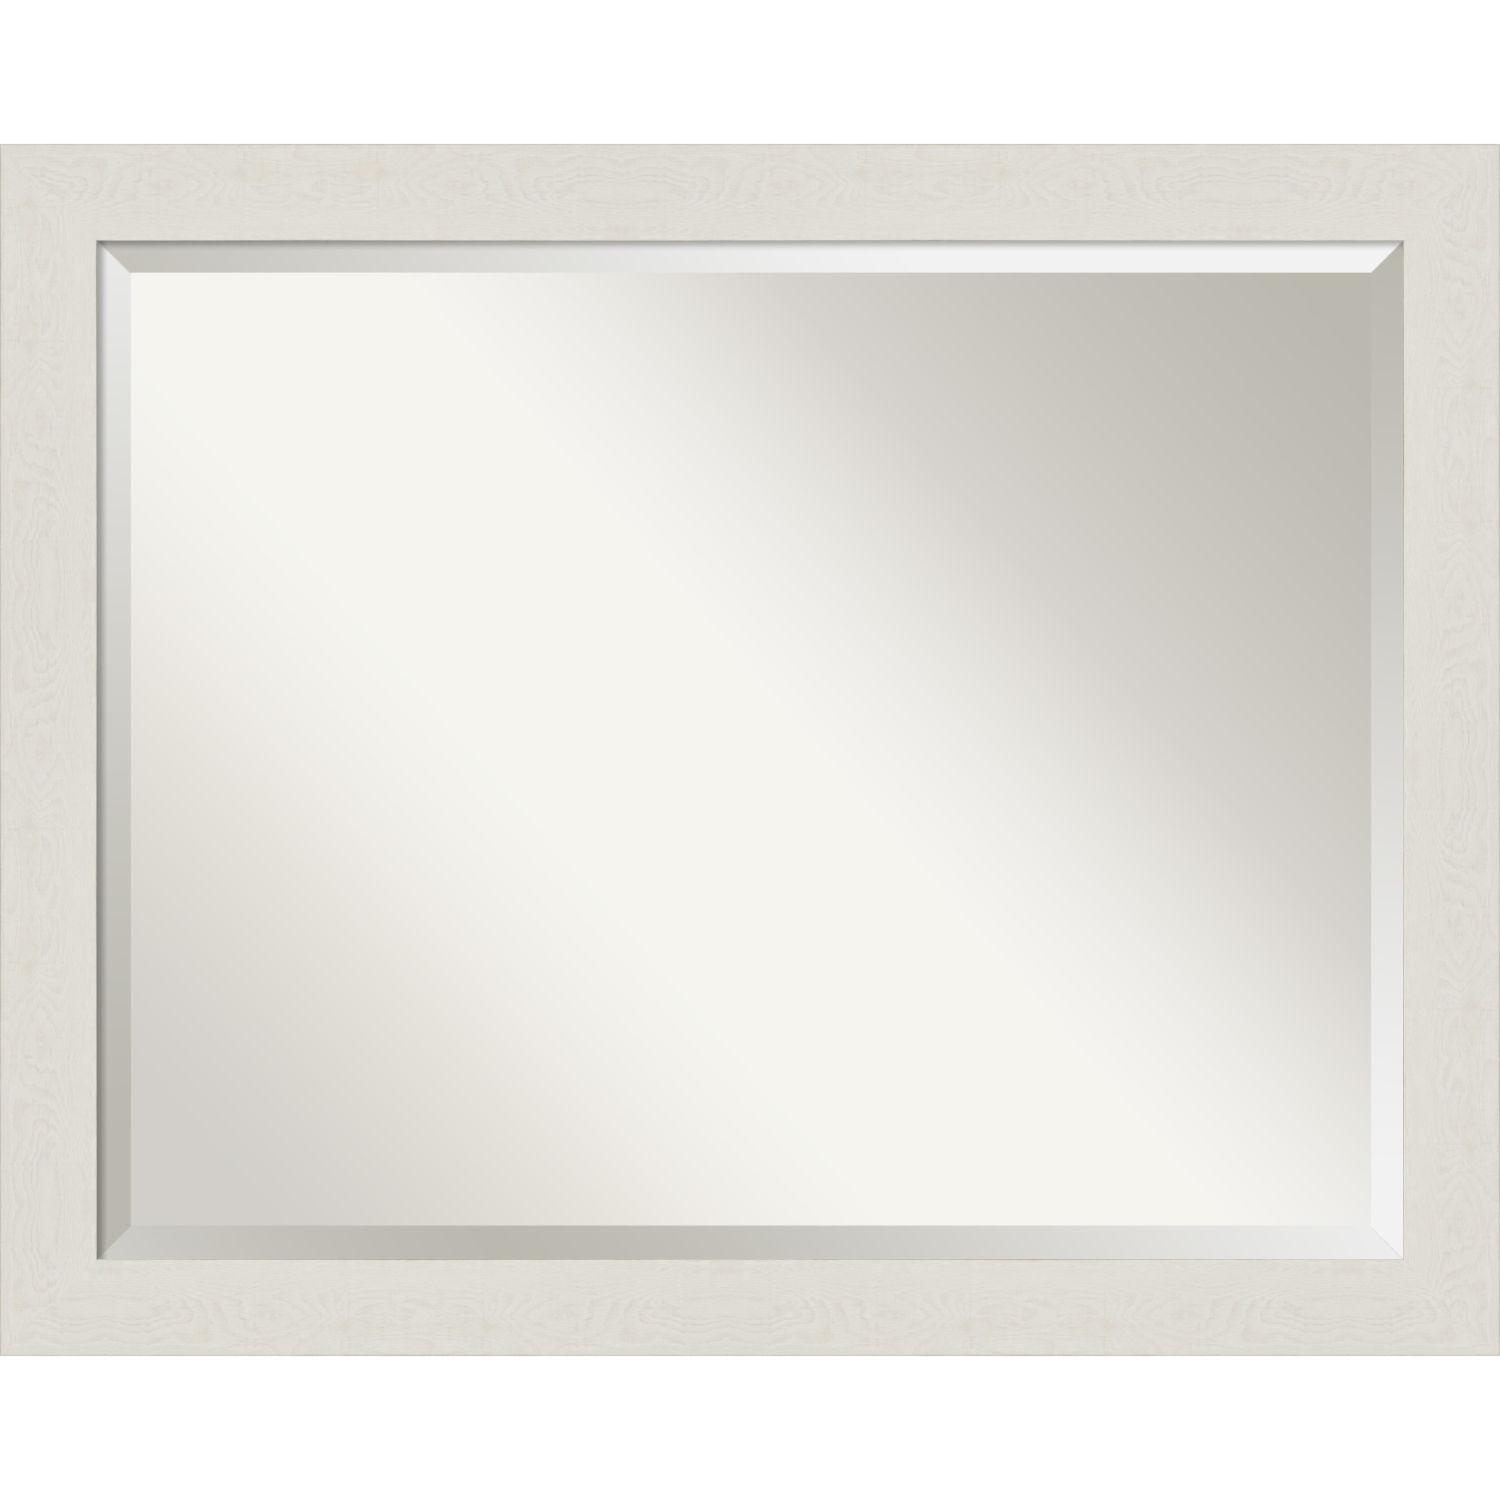 Rustic Plank White 31W X 25H-Inch Bathroom Vanity Wall Mirror